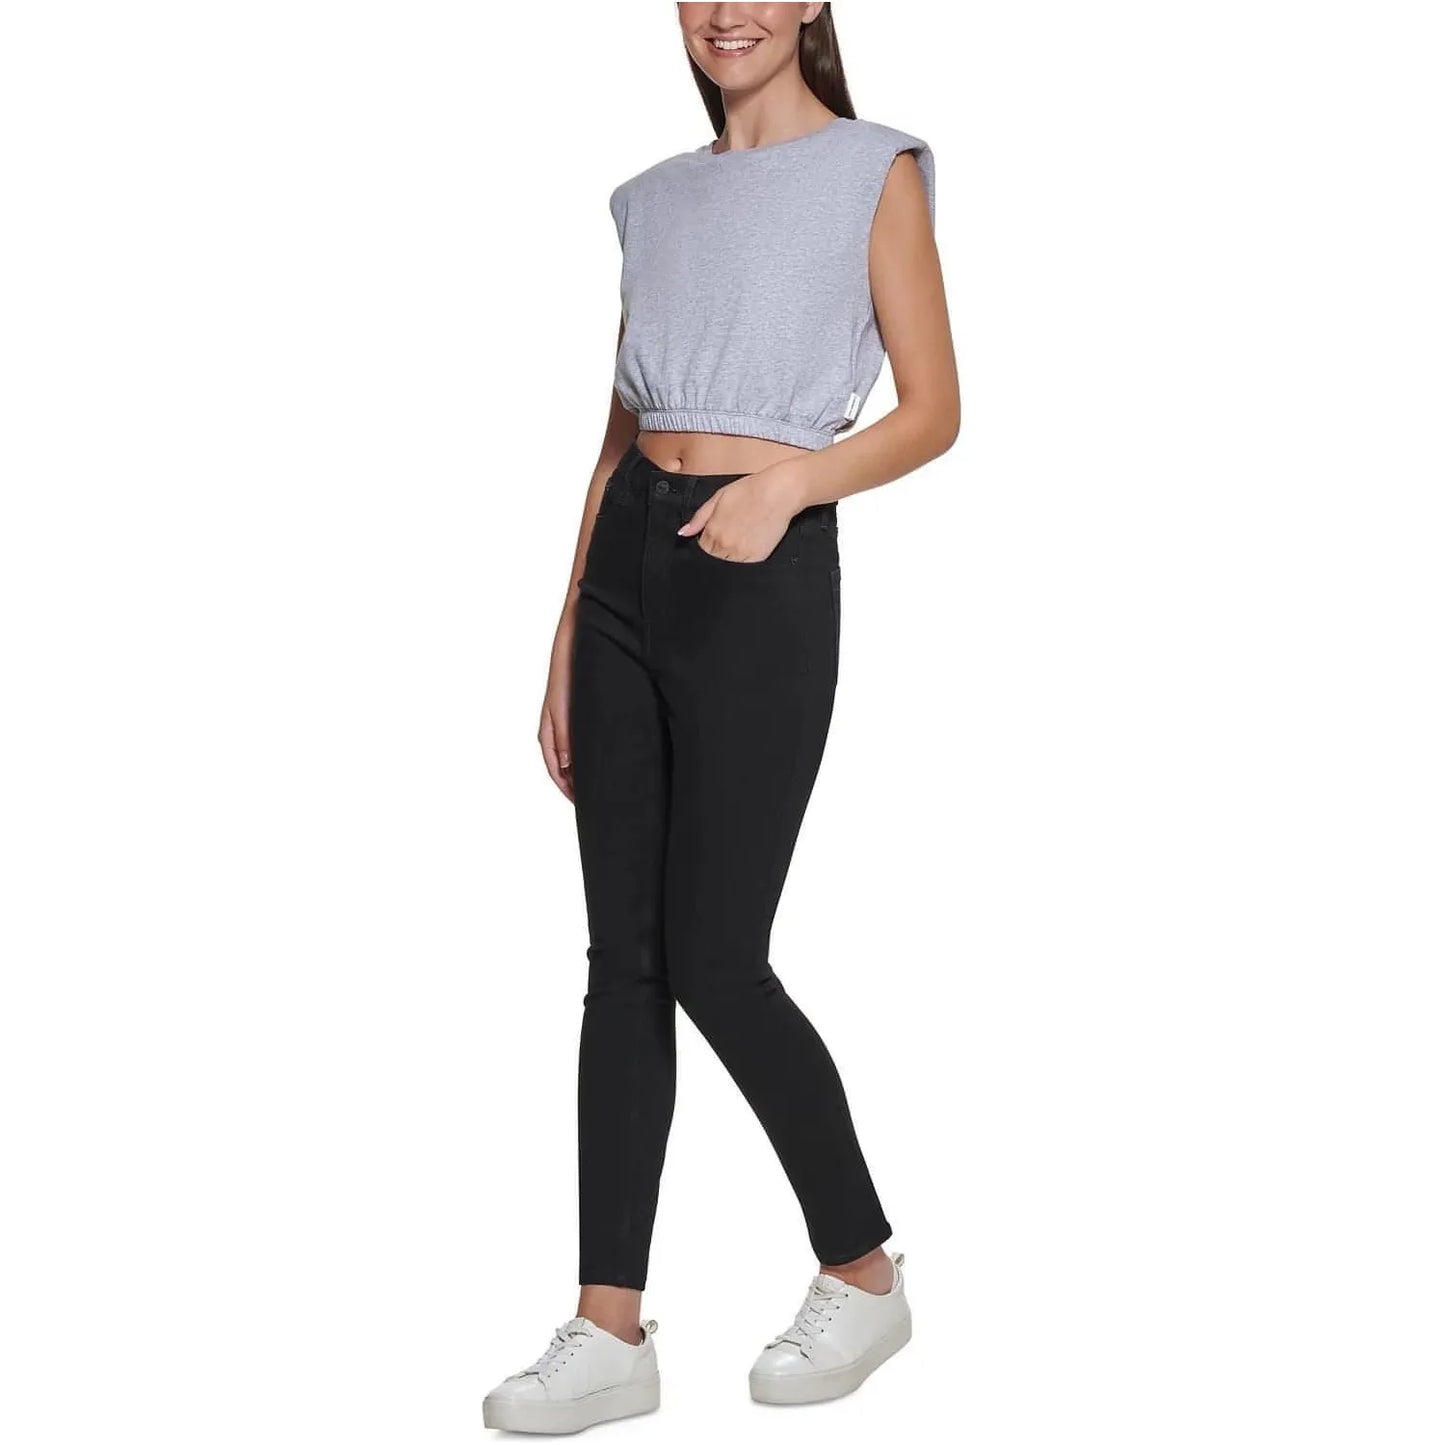 Calvin Klein-Calvin Klein Jeans Cropped Shoulder-Pad Tank Top, Silver, Size: L - Brandat Outlet